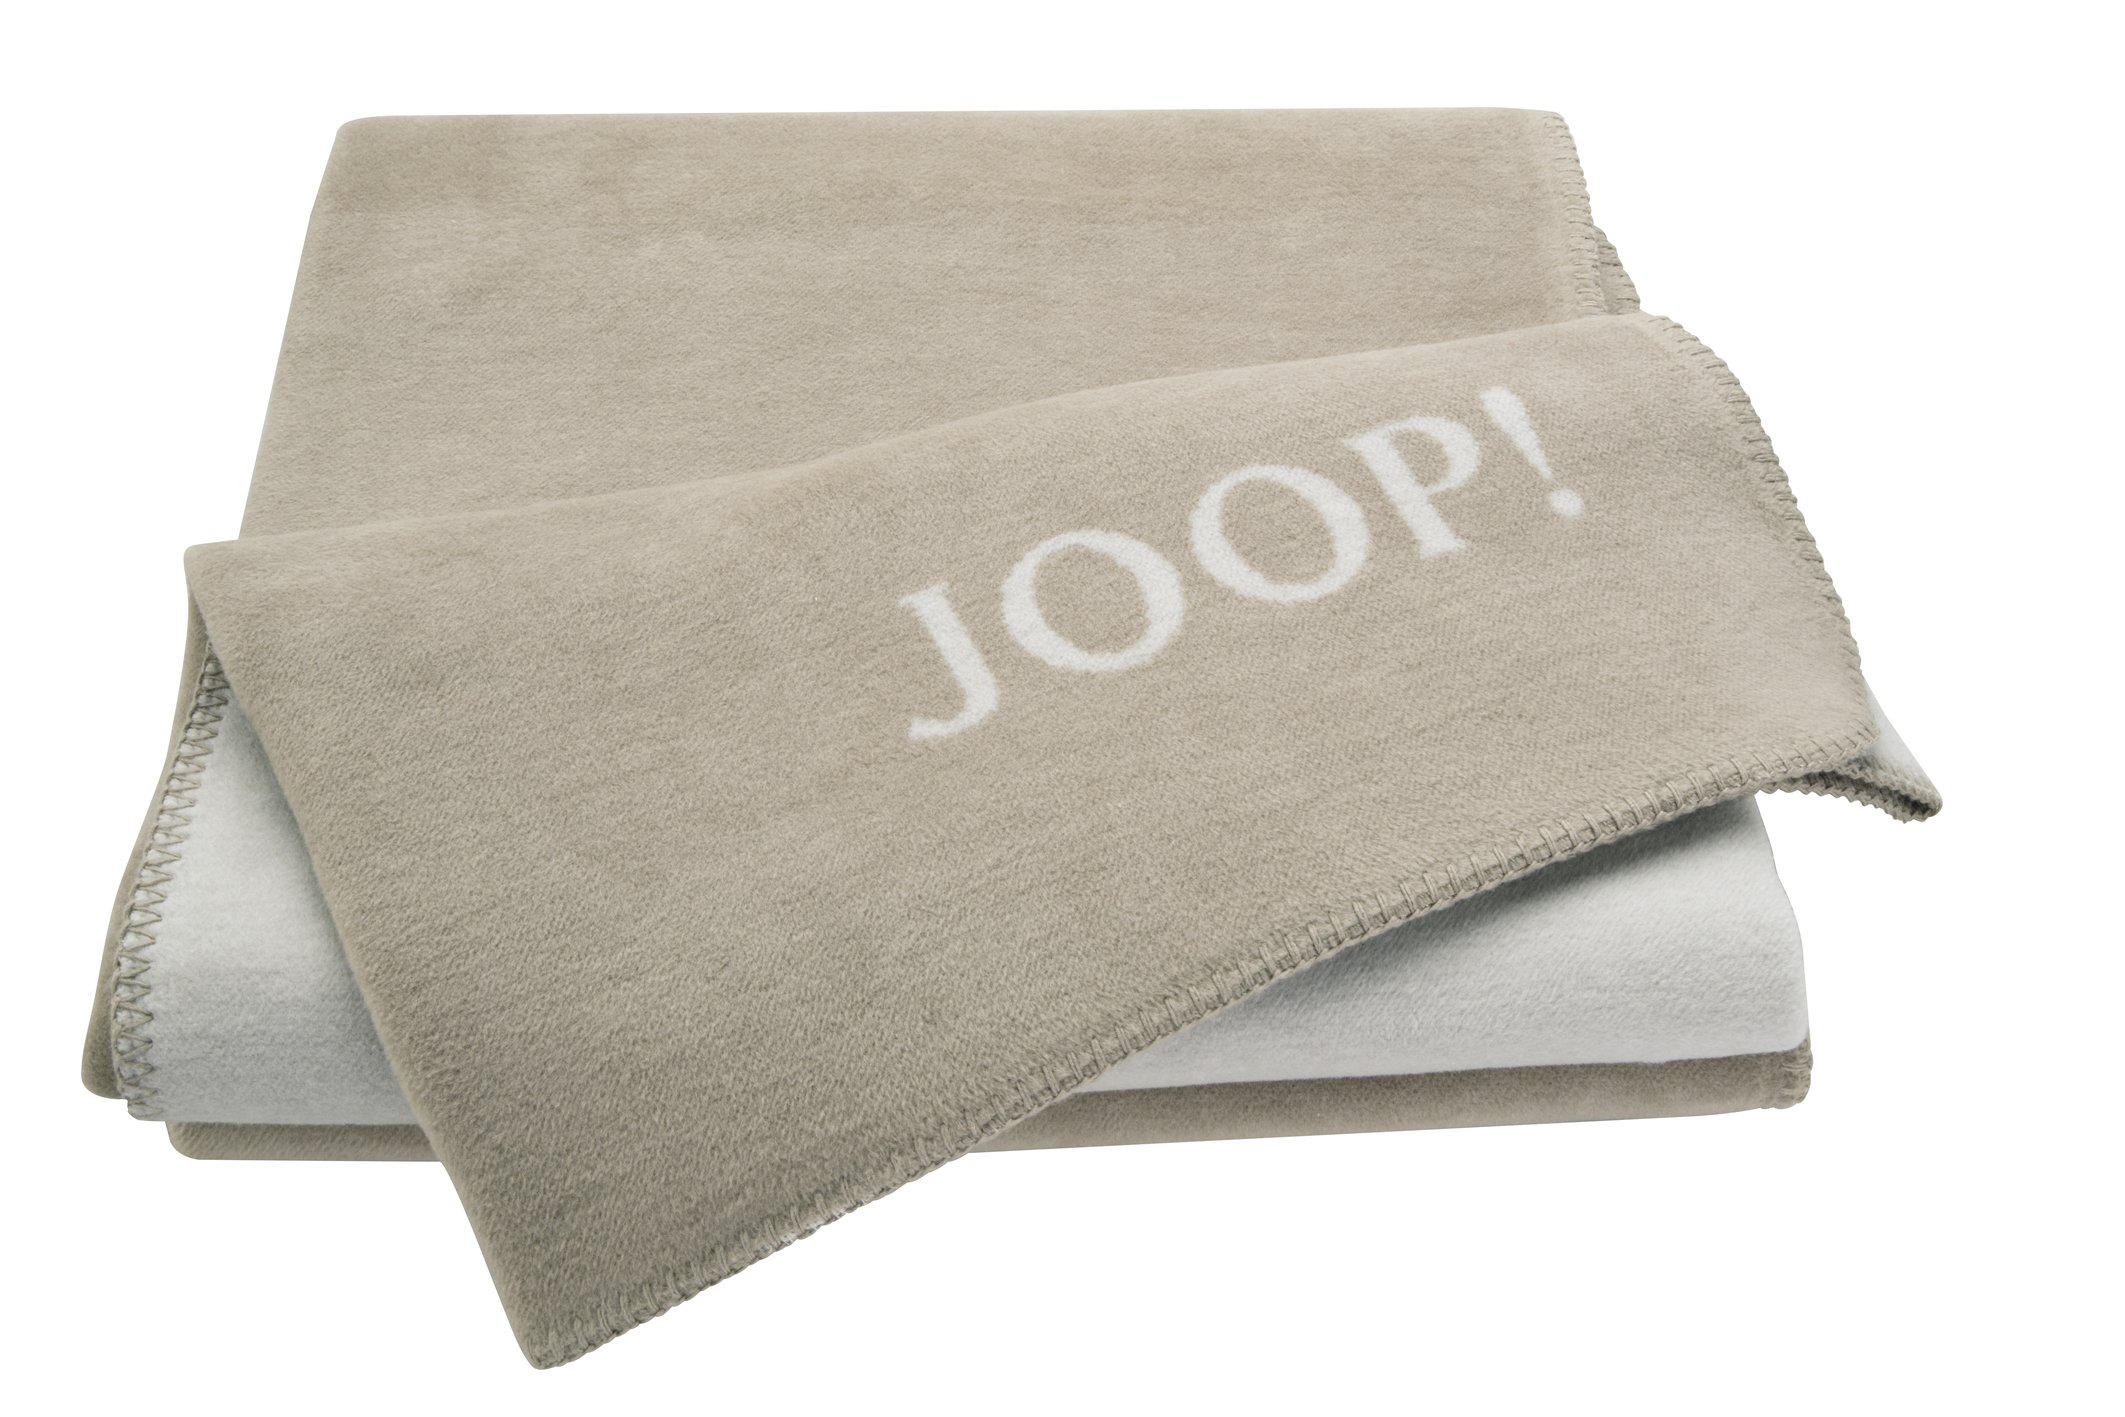 WOHNDECKE Uni Doubleface 150/200 cm  - Sandfarben/Creme, Basics, Textil (150/200cm) - Joop!